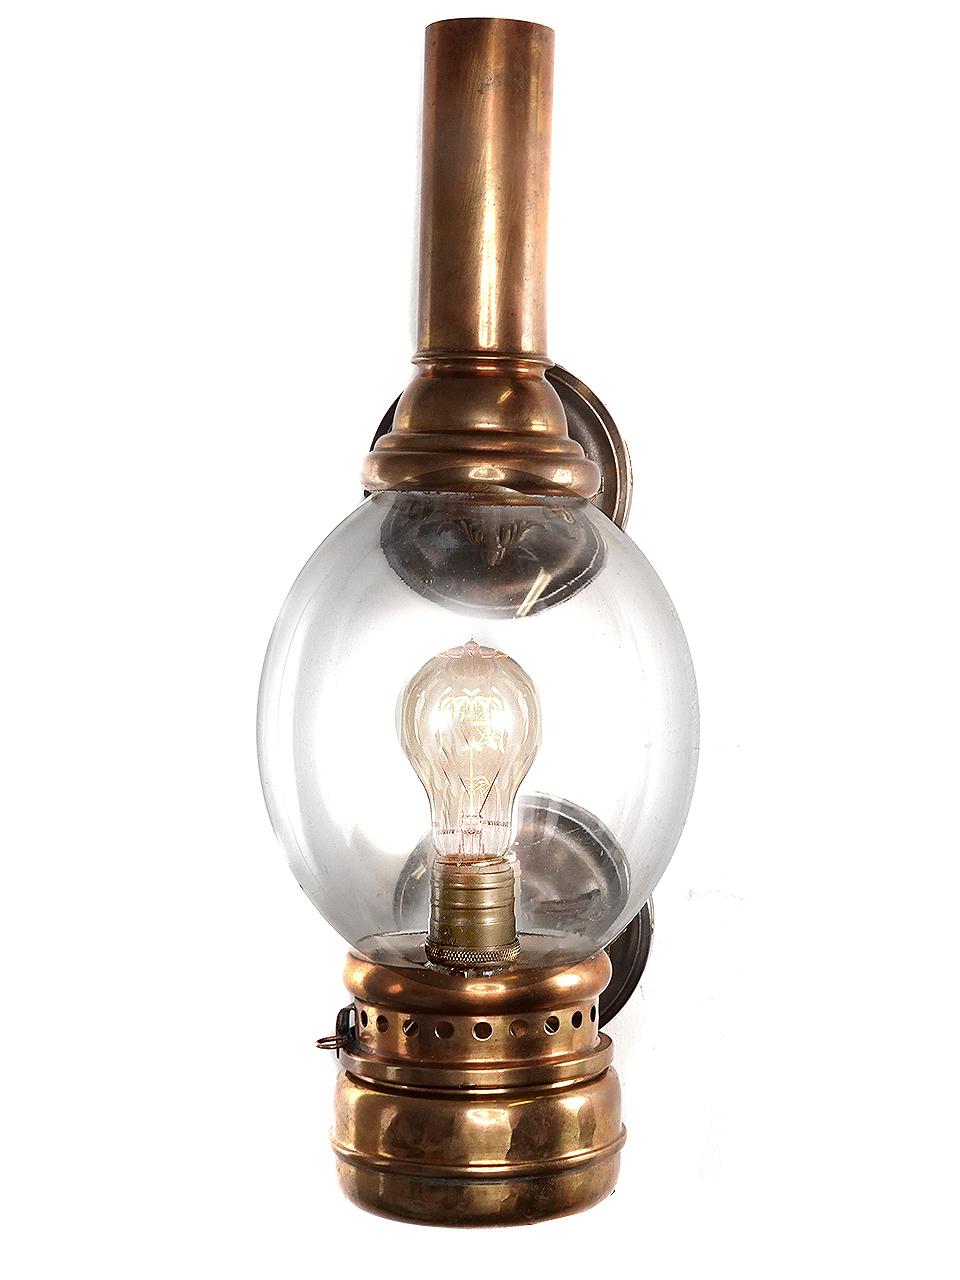 Industrial Adams and Westlake Egg Globe Railcar Side Lamp